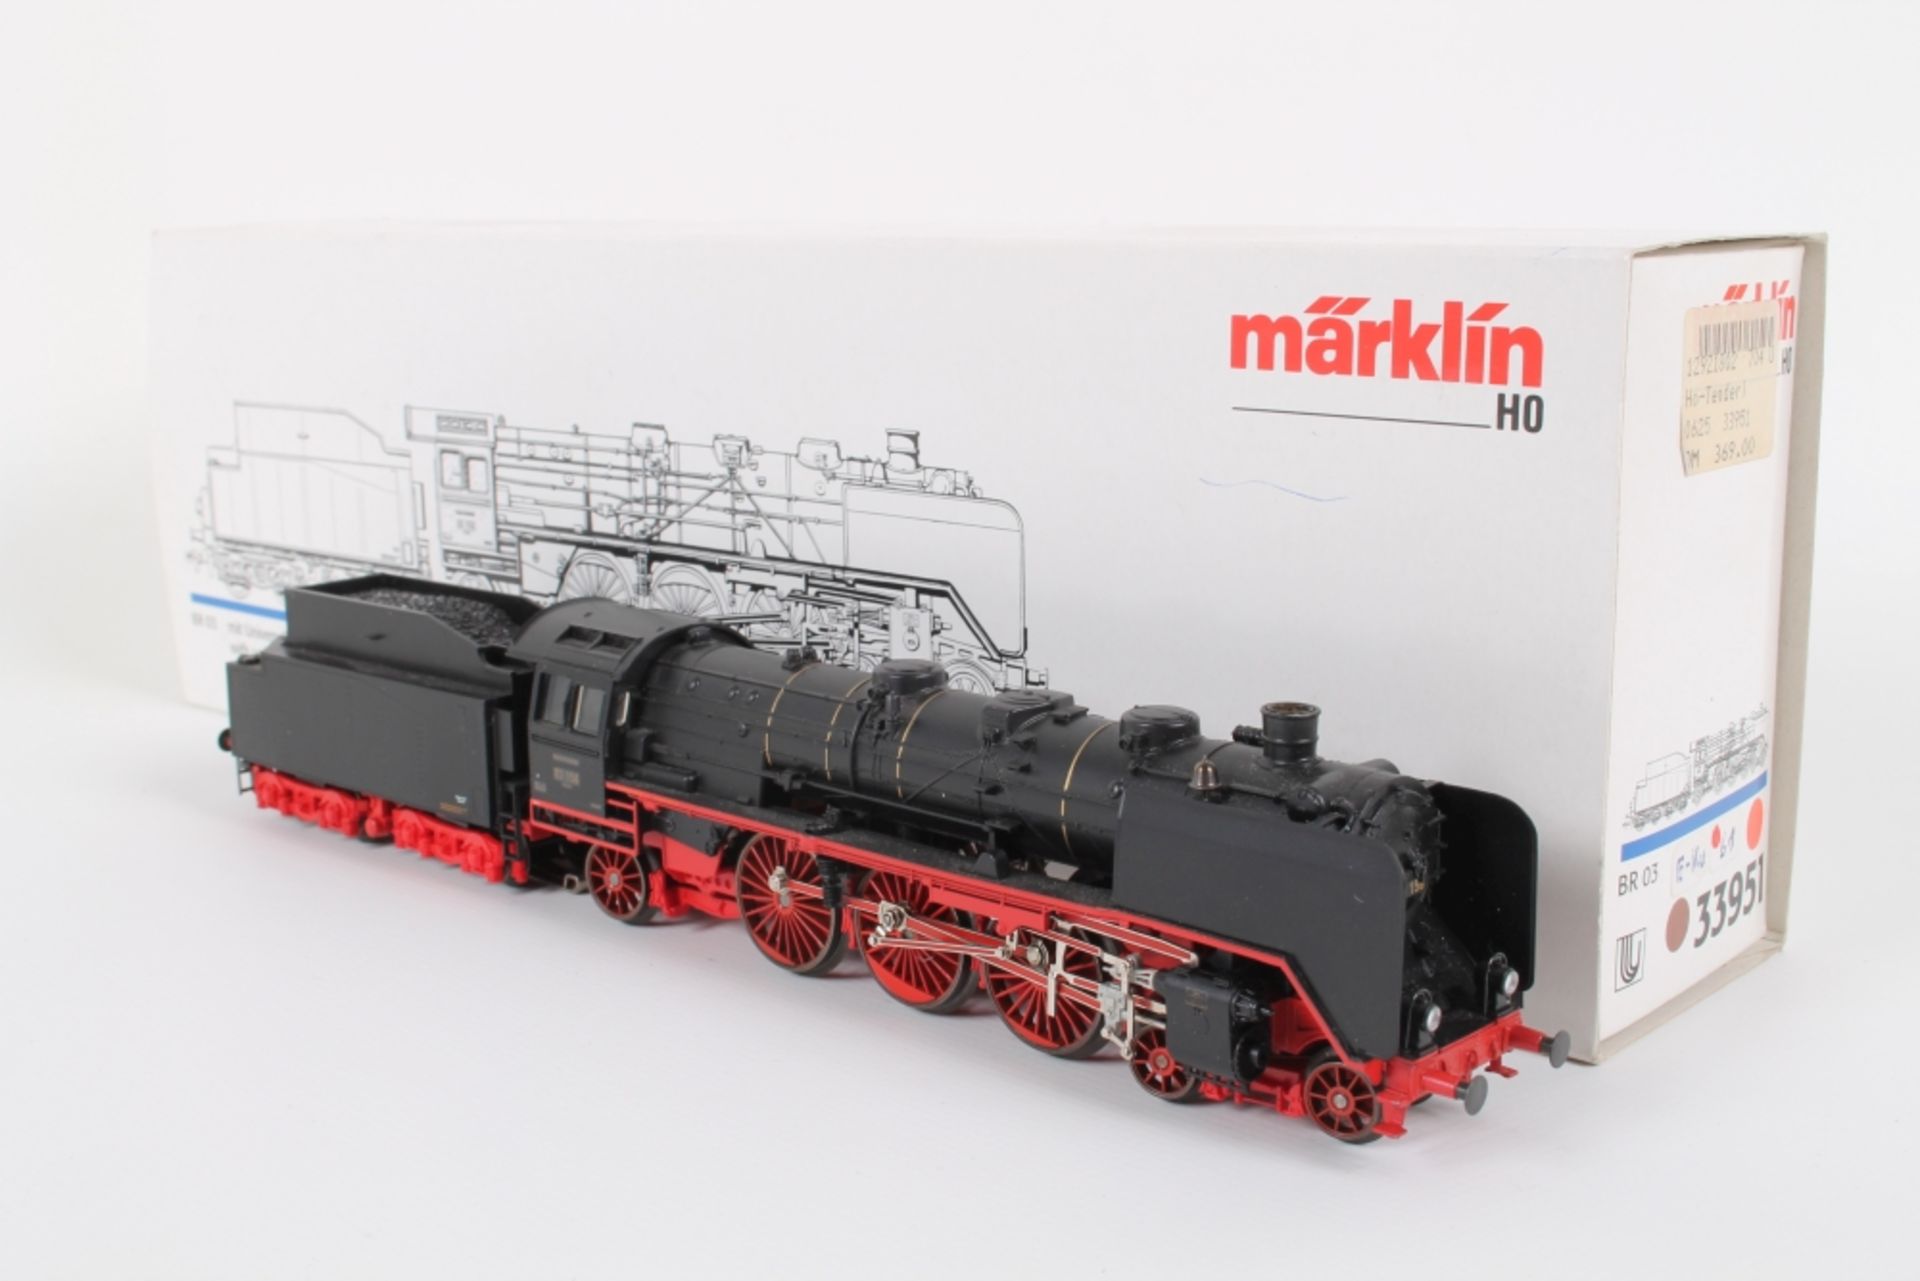 Märklin 33951, "03 156", Dampflokomotive der DRG, DELTA- Digital, wird erkannt, fährt weder analog